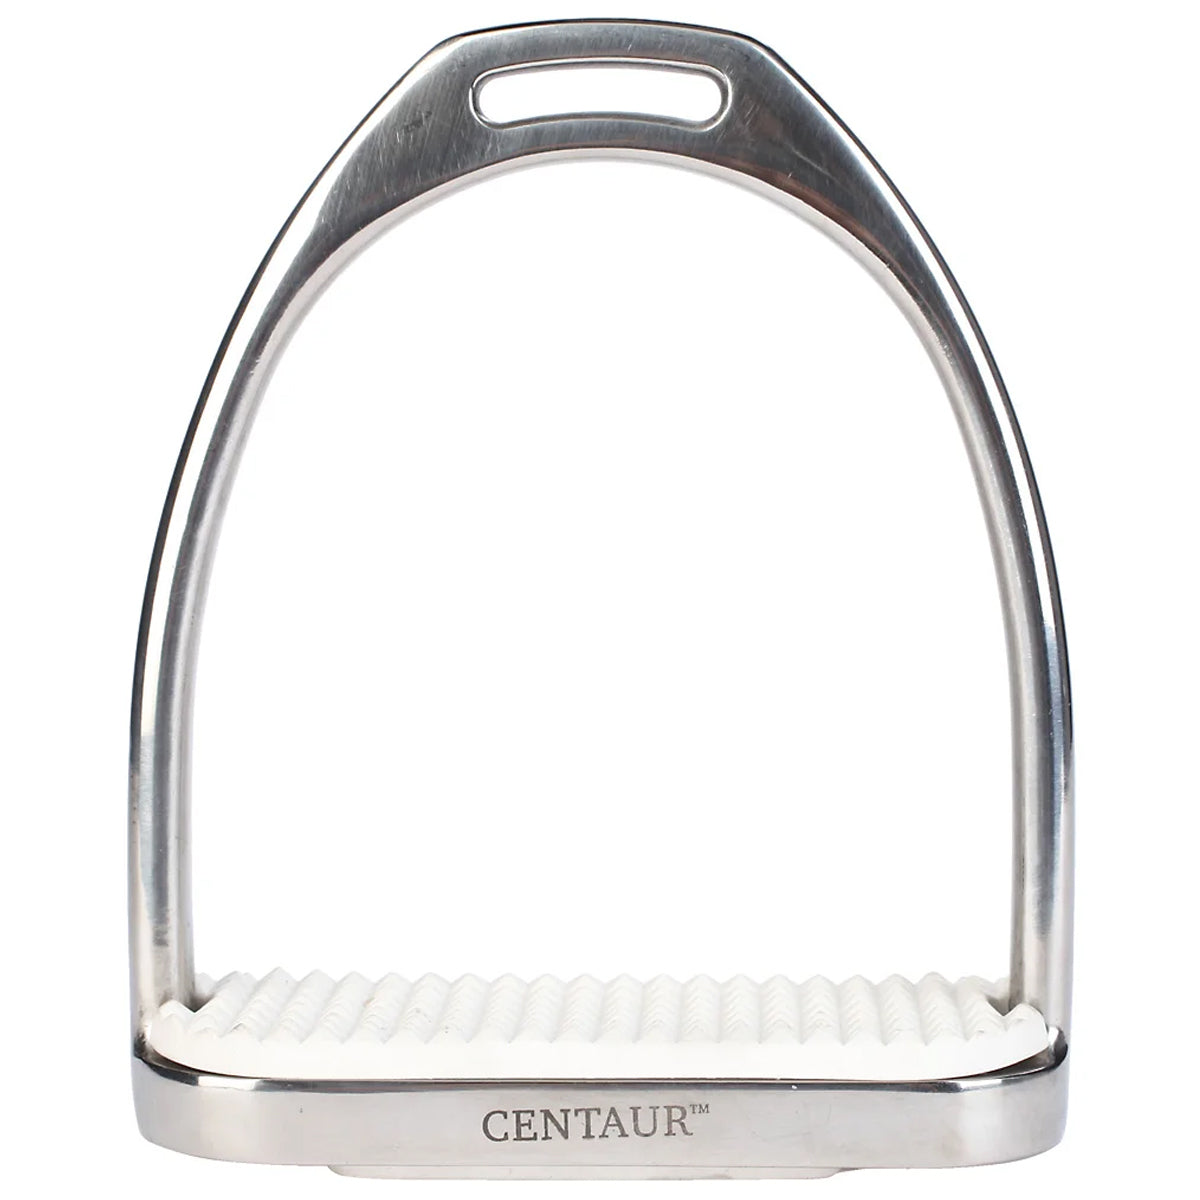 Centaur Stainless Steel Stirrup Irons